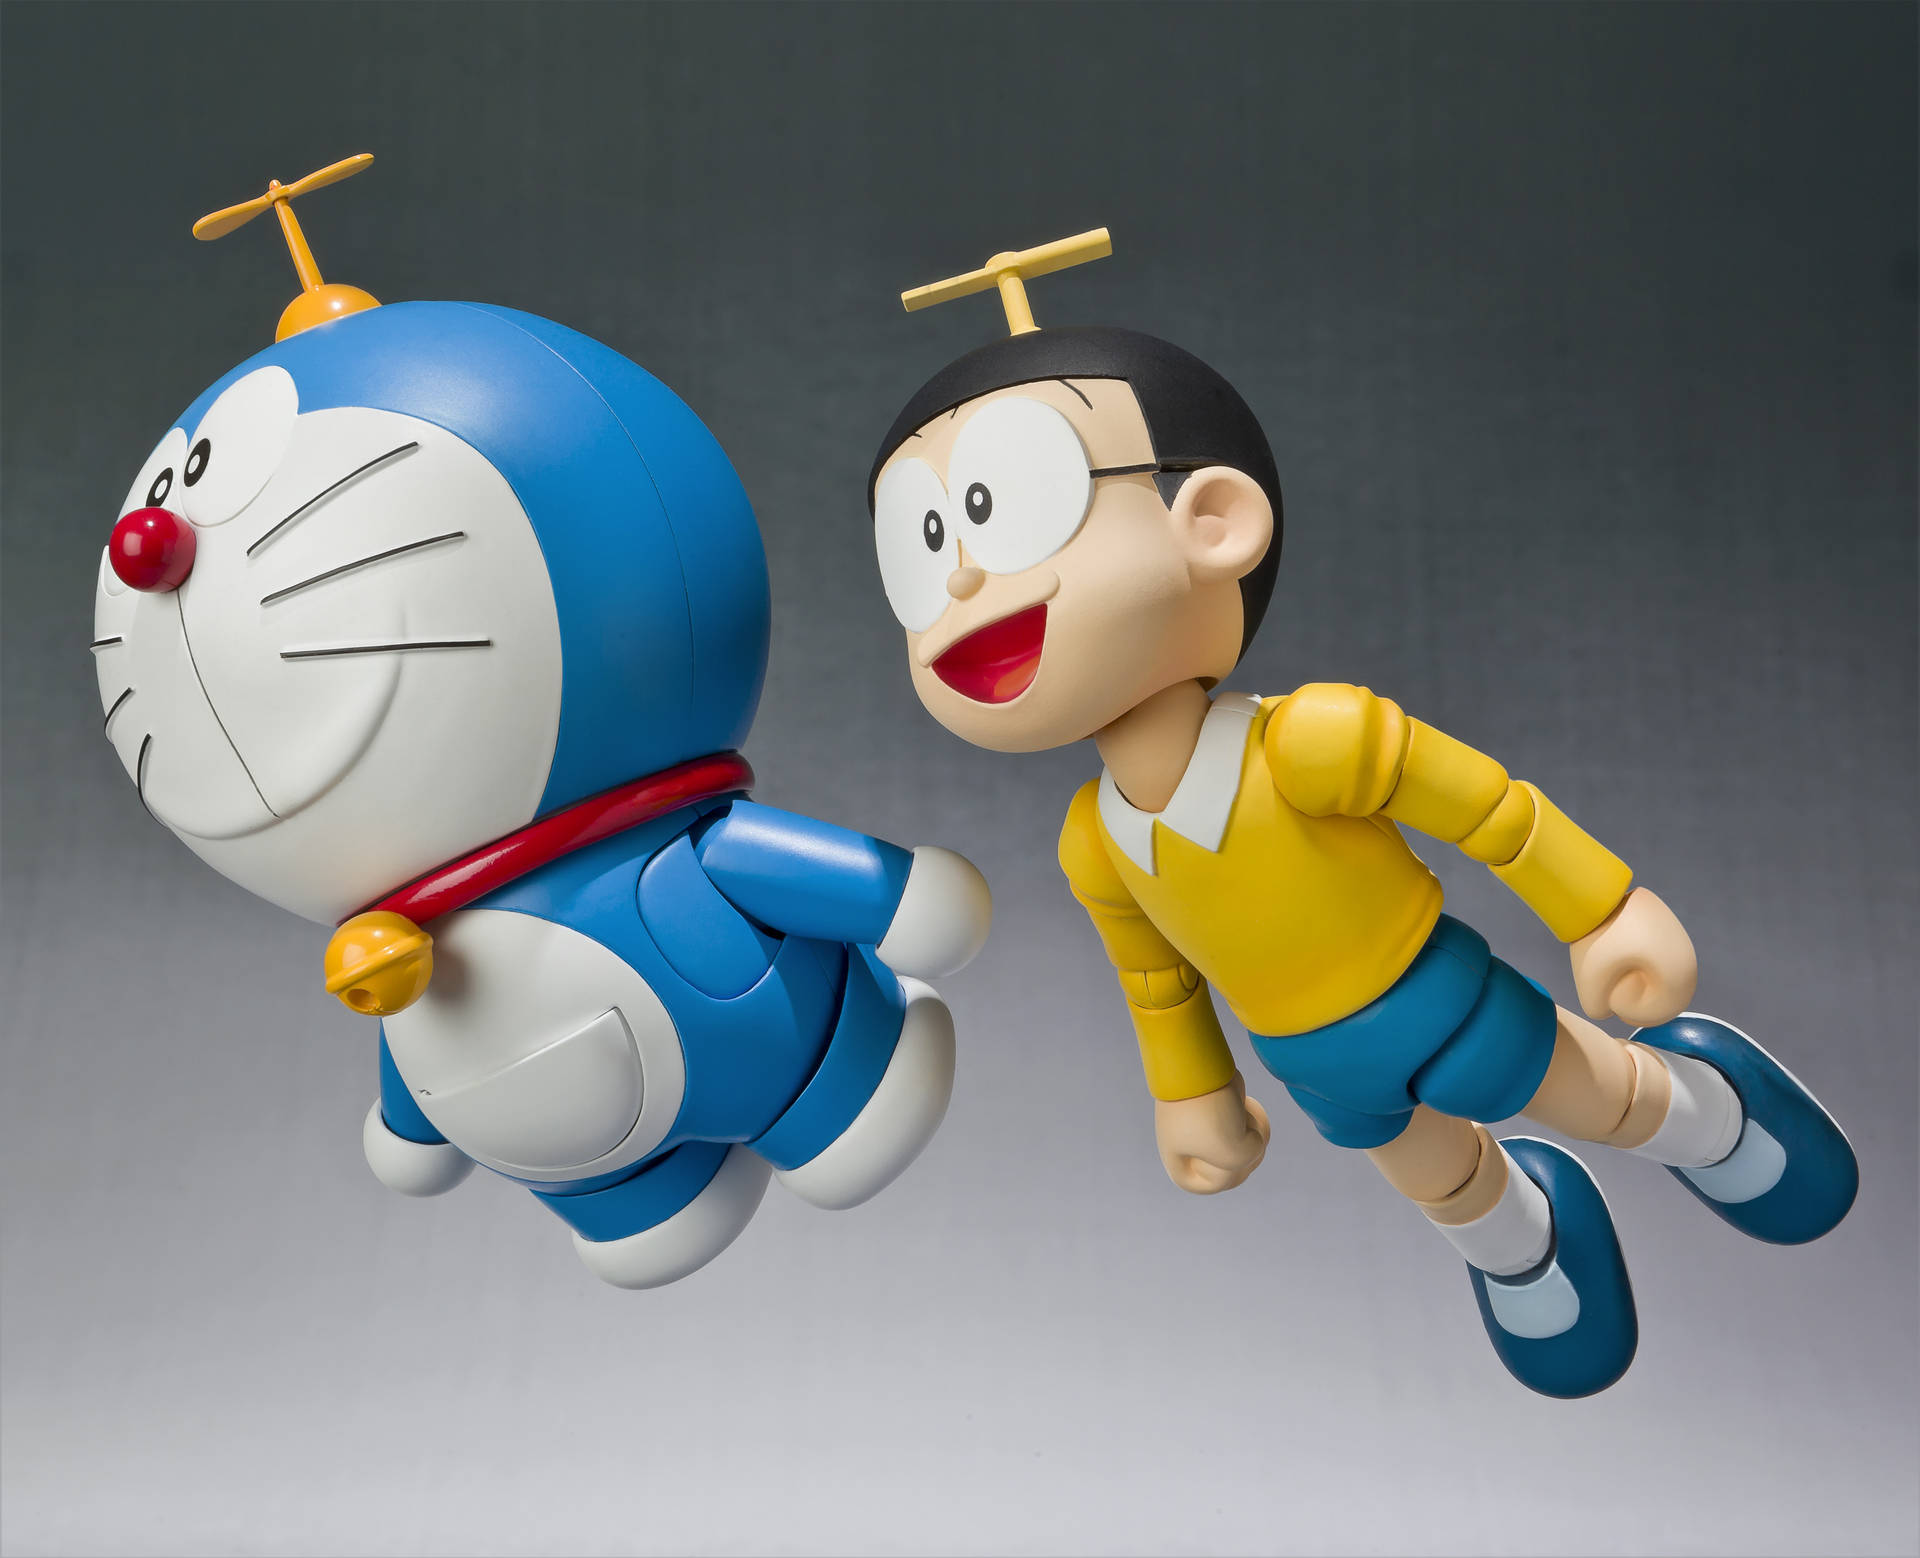 Action Figures Of Nobita Nobi And Doraemon 4k Picture